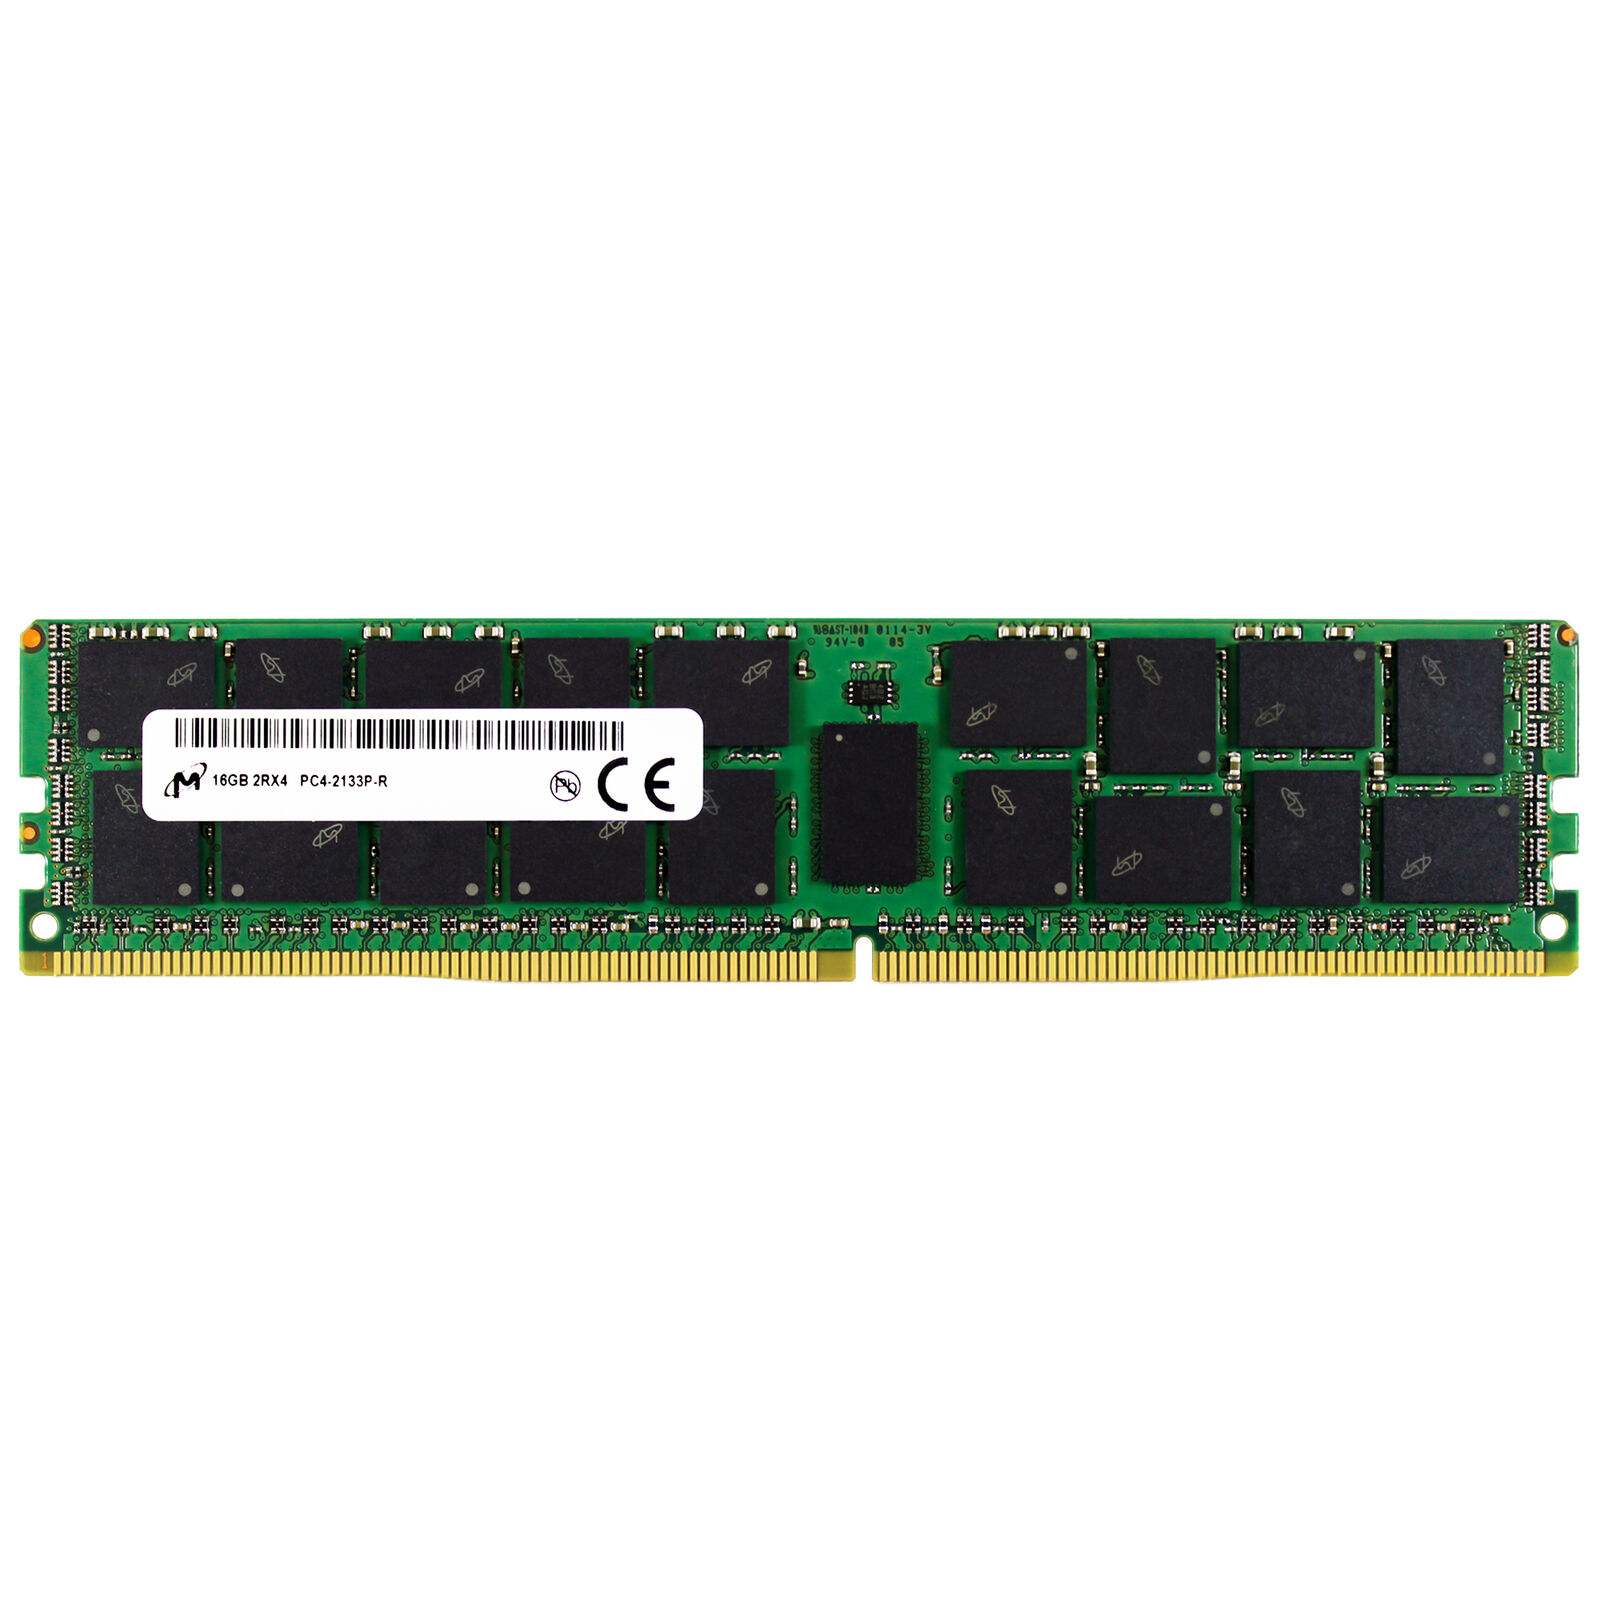 Micron 16GB 2Rx4 PC4-2133P RDIMM DDR4-17000 ECC REG Registered Server Memory RAM